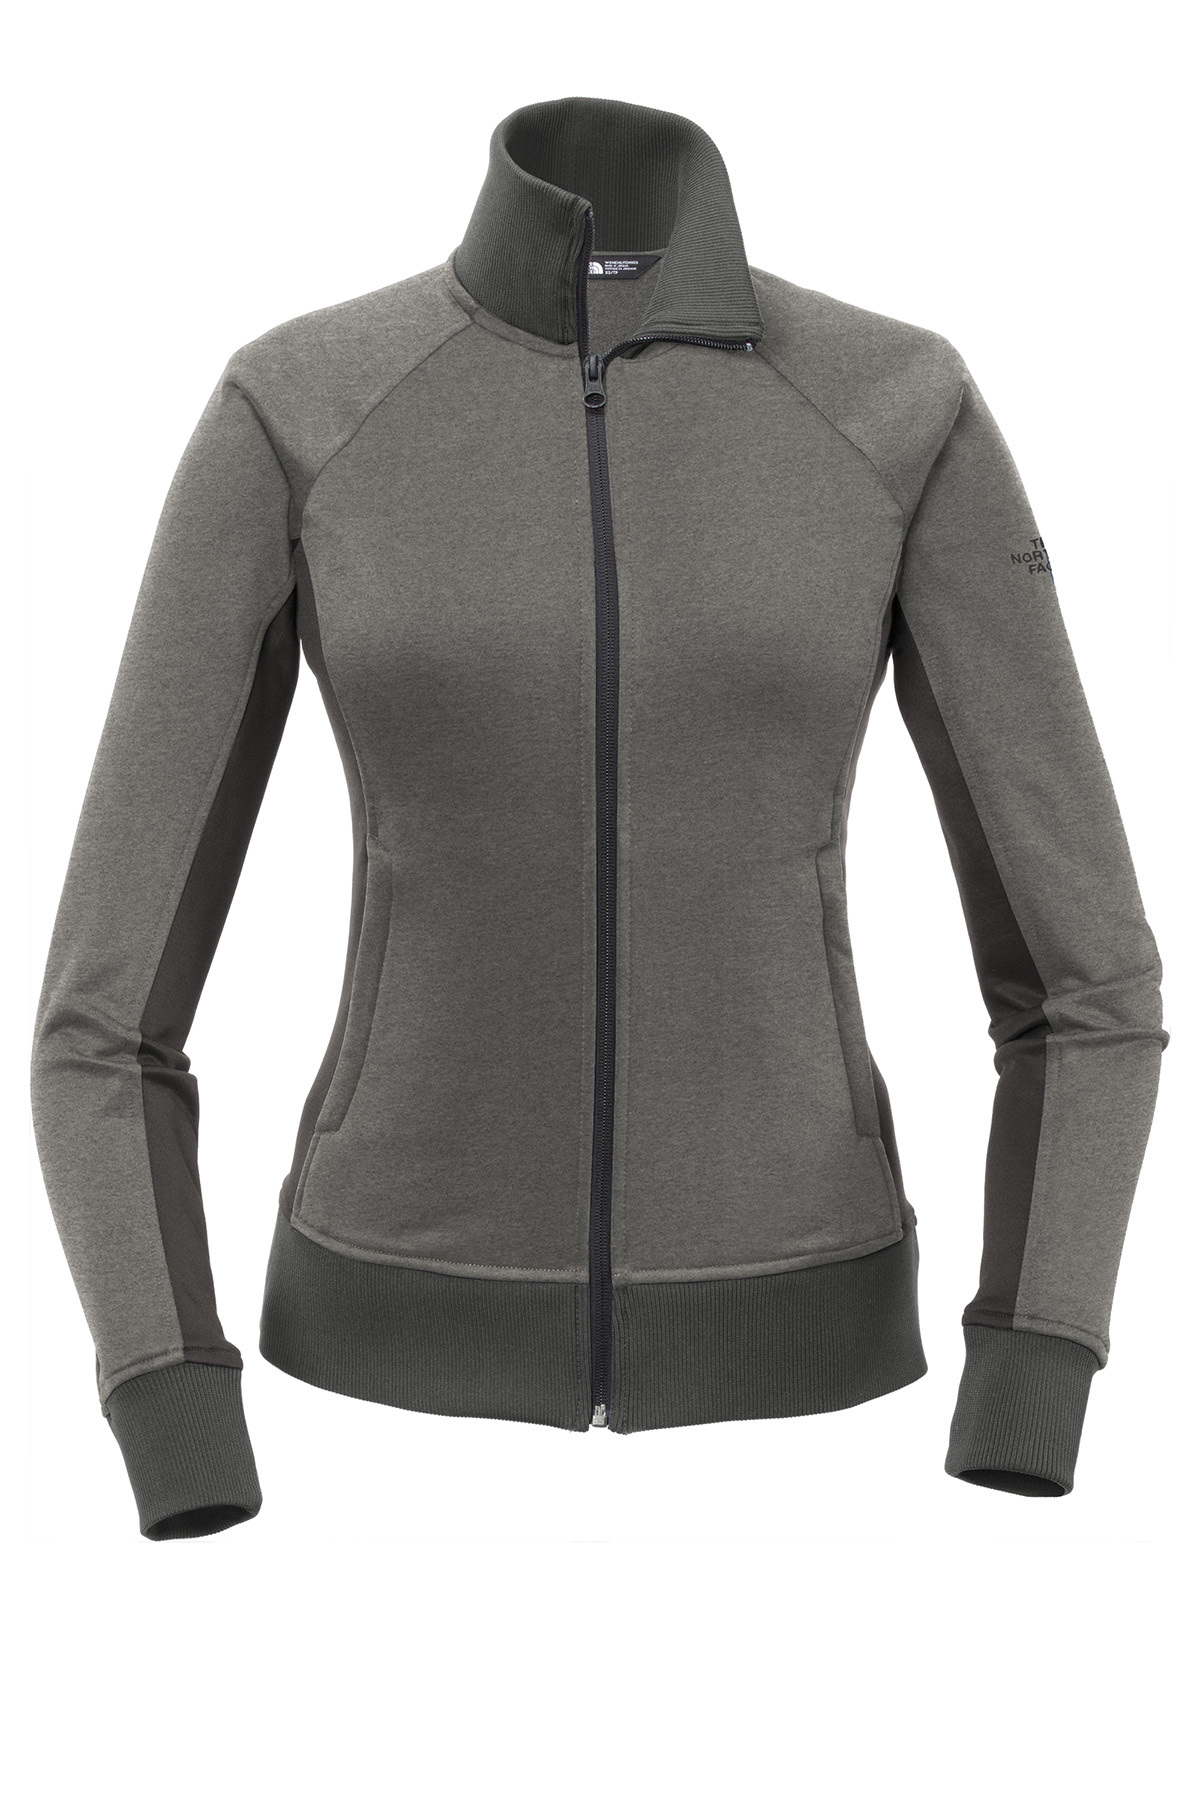 The North Face Ladies Tech Full-Zip Fleece Jacket, Product